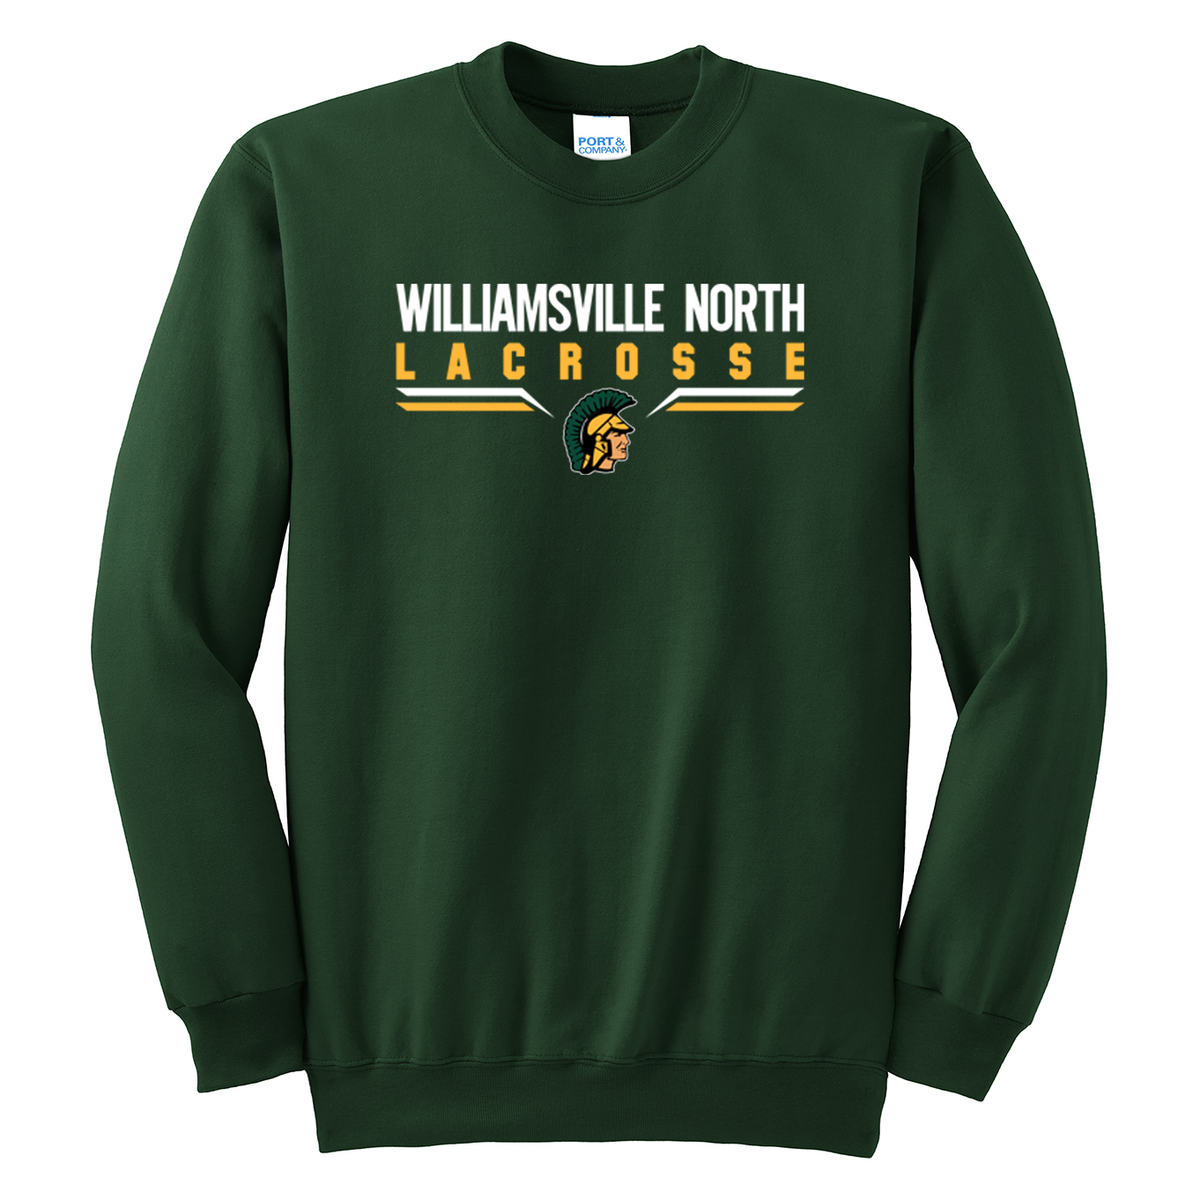 Williamsville North Lacrosse Crew Neck Sweater